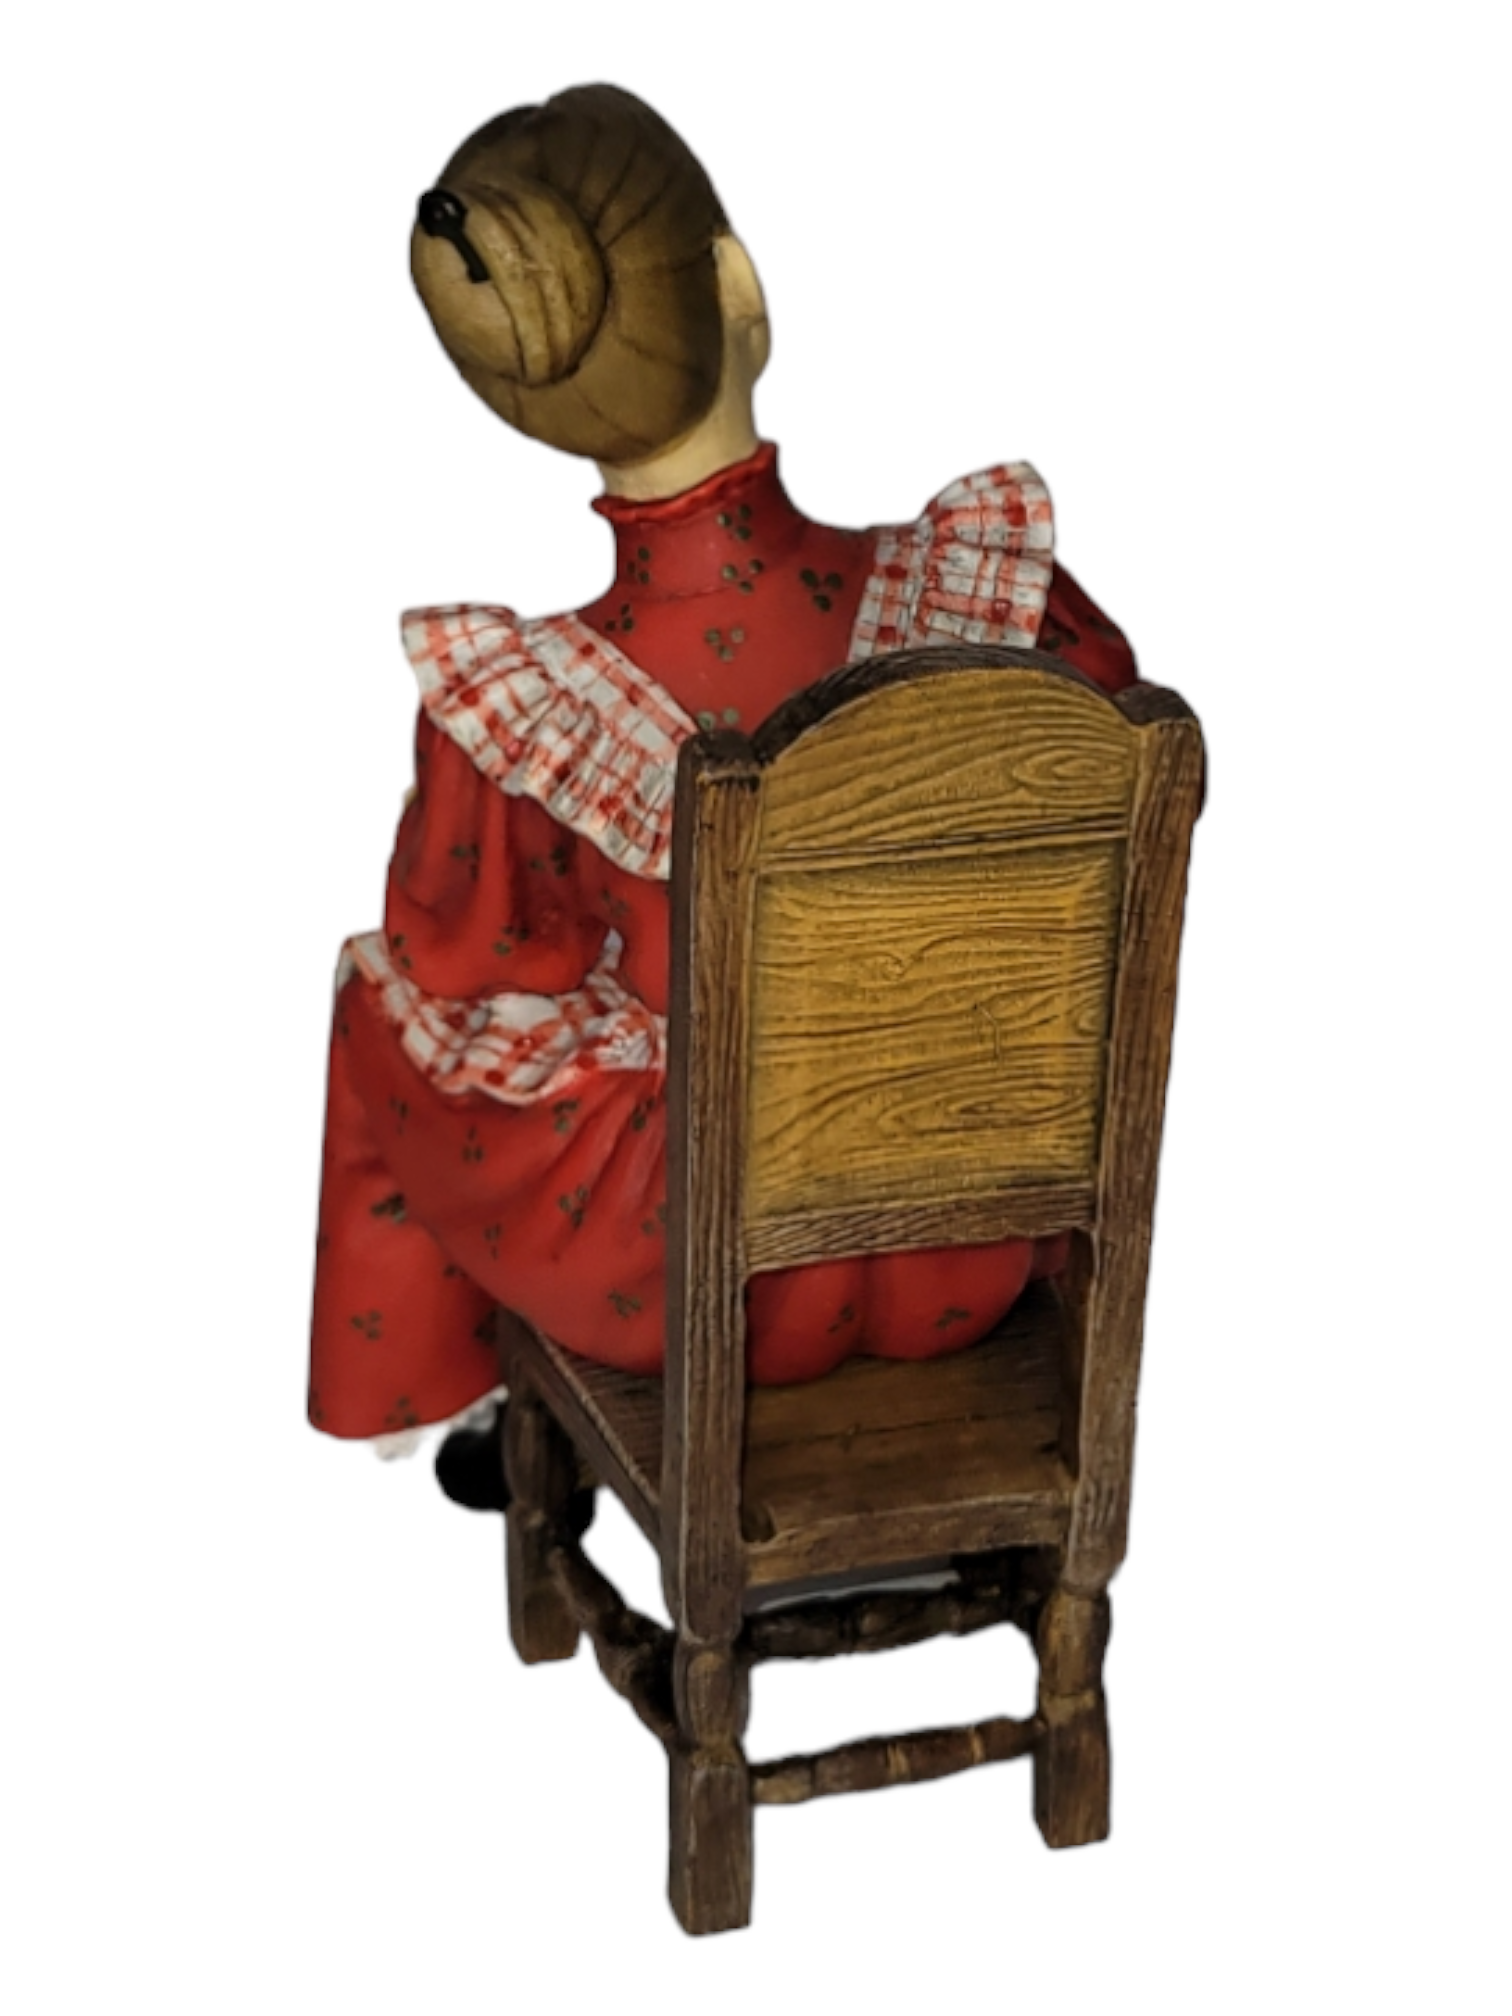 Figurine: Teacher in Chair